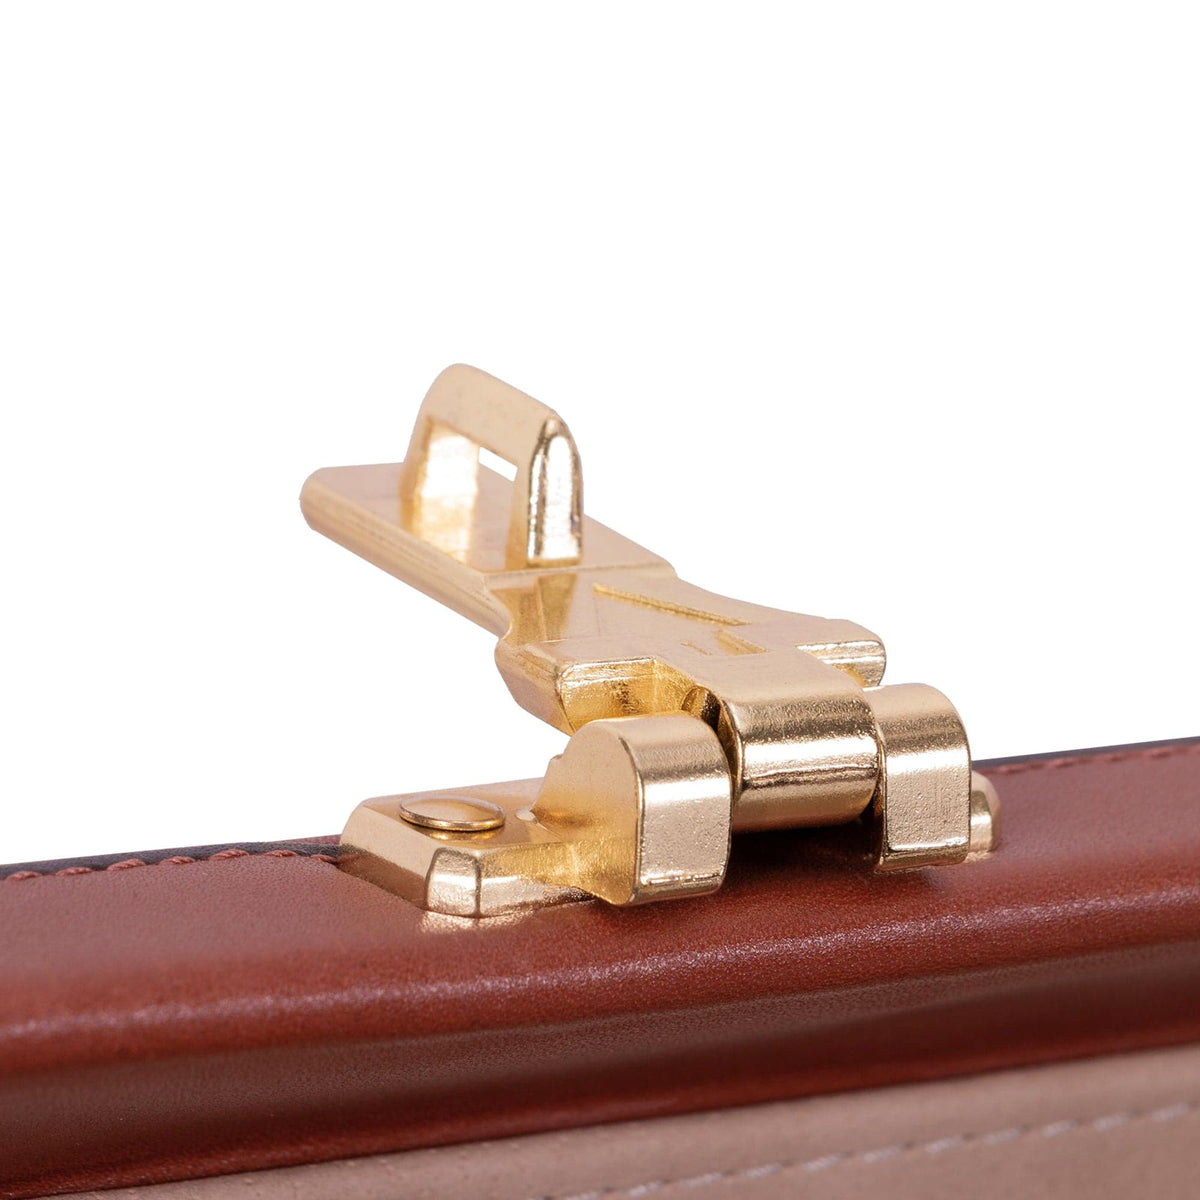 McKlein USA Harper 4.5" Leather  Expandable Attache Briefcase